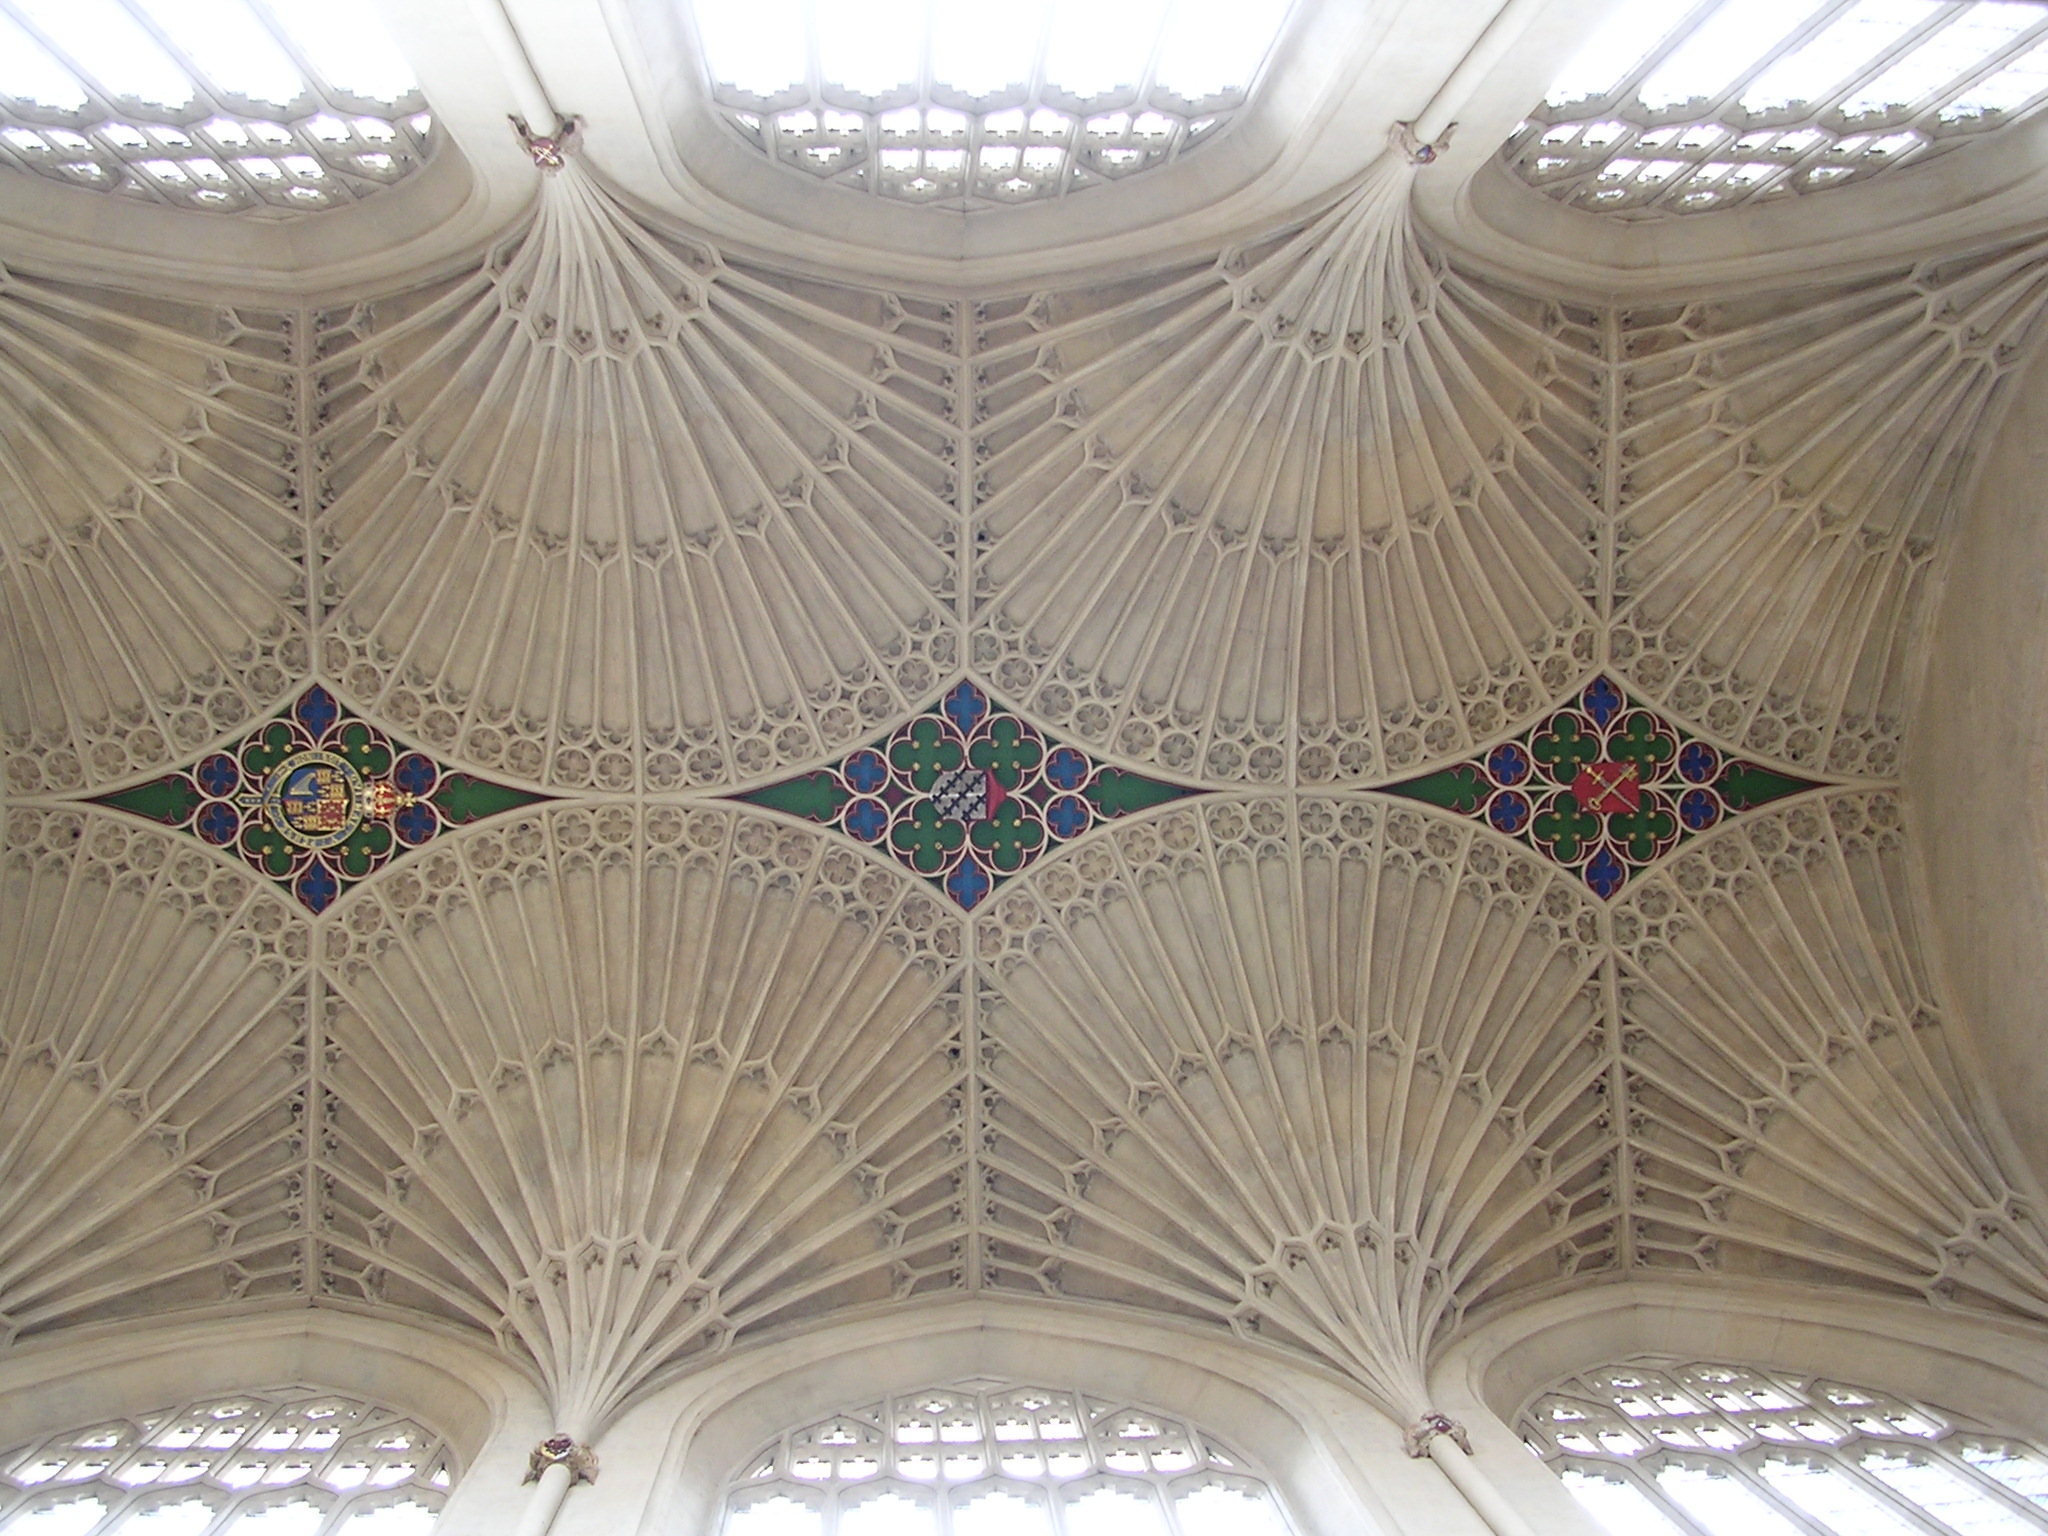 File:Fan vaulting in quire of Bath Abbey.JPG - Wikipedia